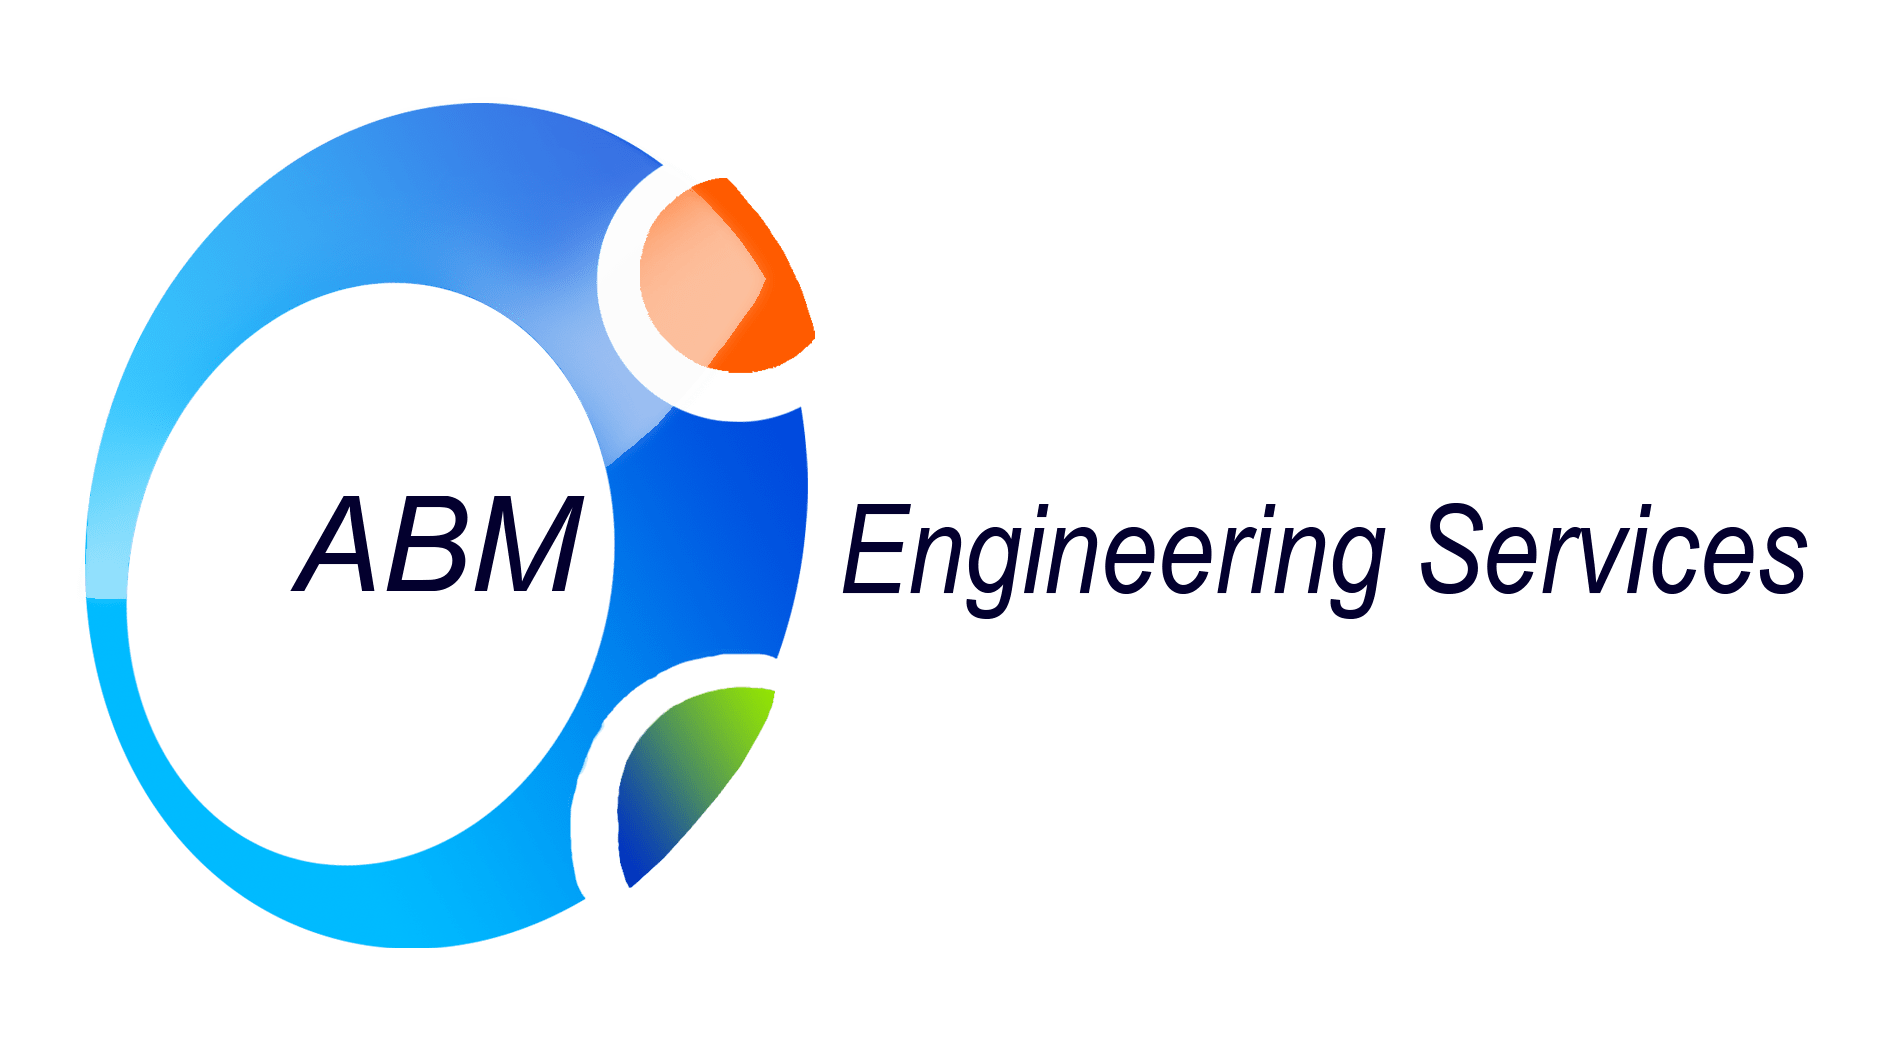 ABM Engineering Services Logo photo - 1